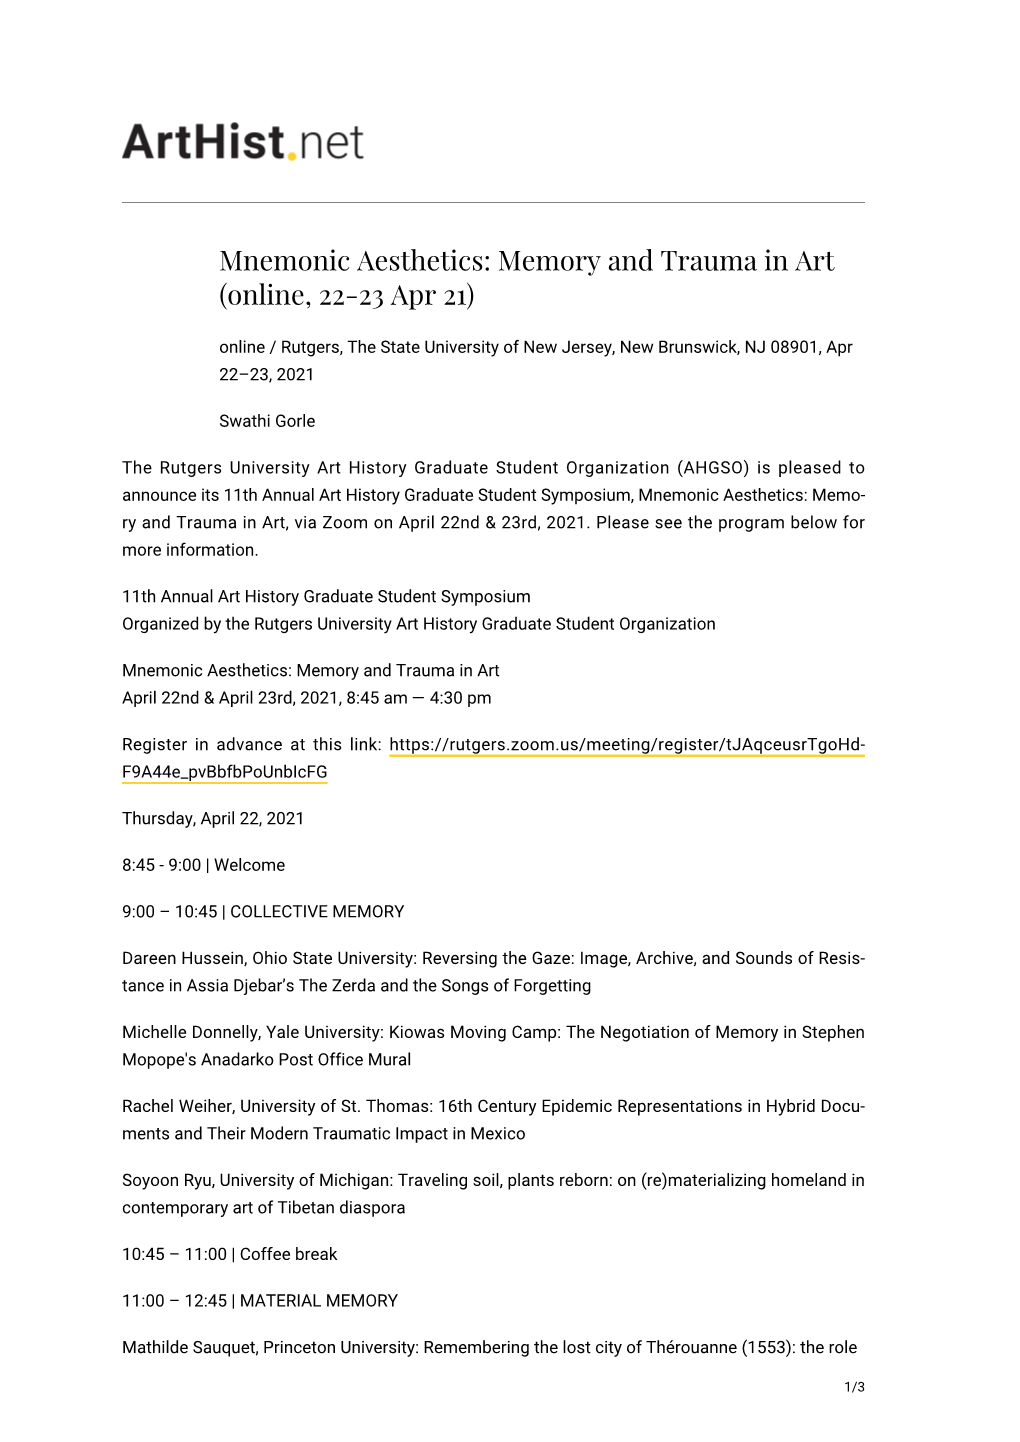 Mnemonic Aesthetics: Memory and Trauma in Art (Online, 22-23 Apr 21)